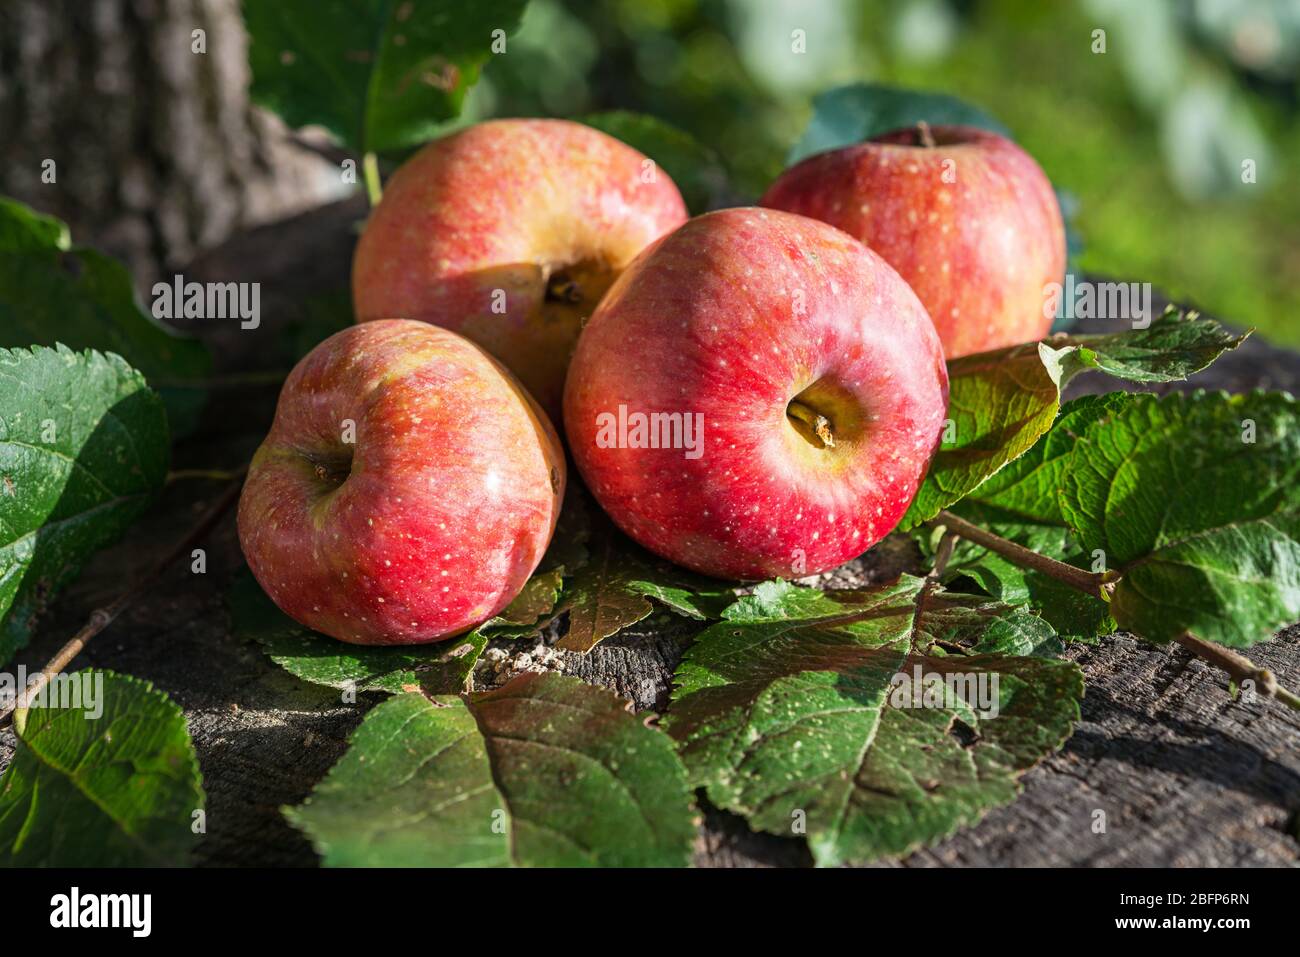 https://c8.alamy.com/comp/2BFP6RN/organic-royal-gala-fresh-apples-in-autumn-garden-2BFP6RN.jpg